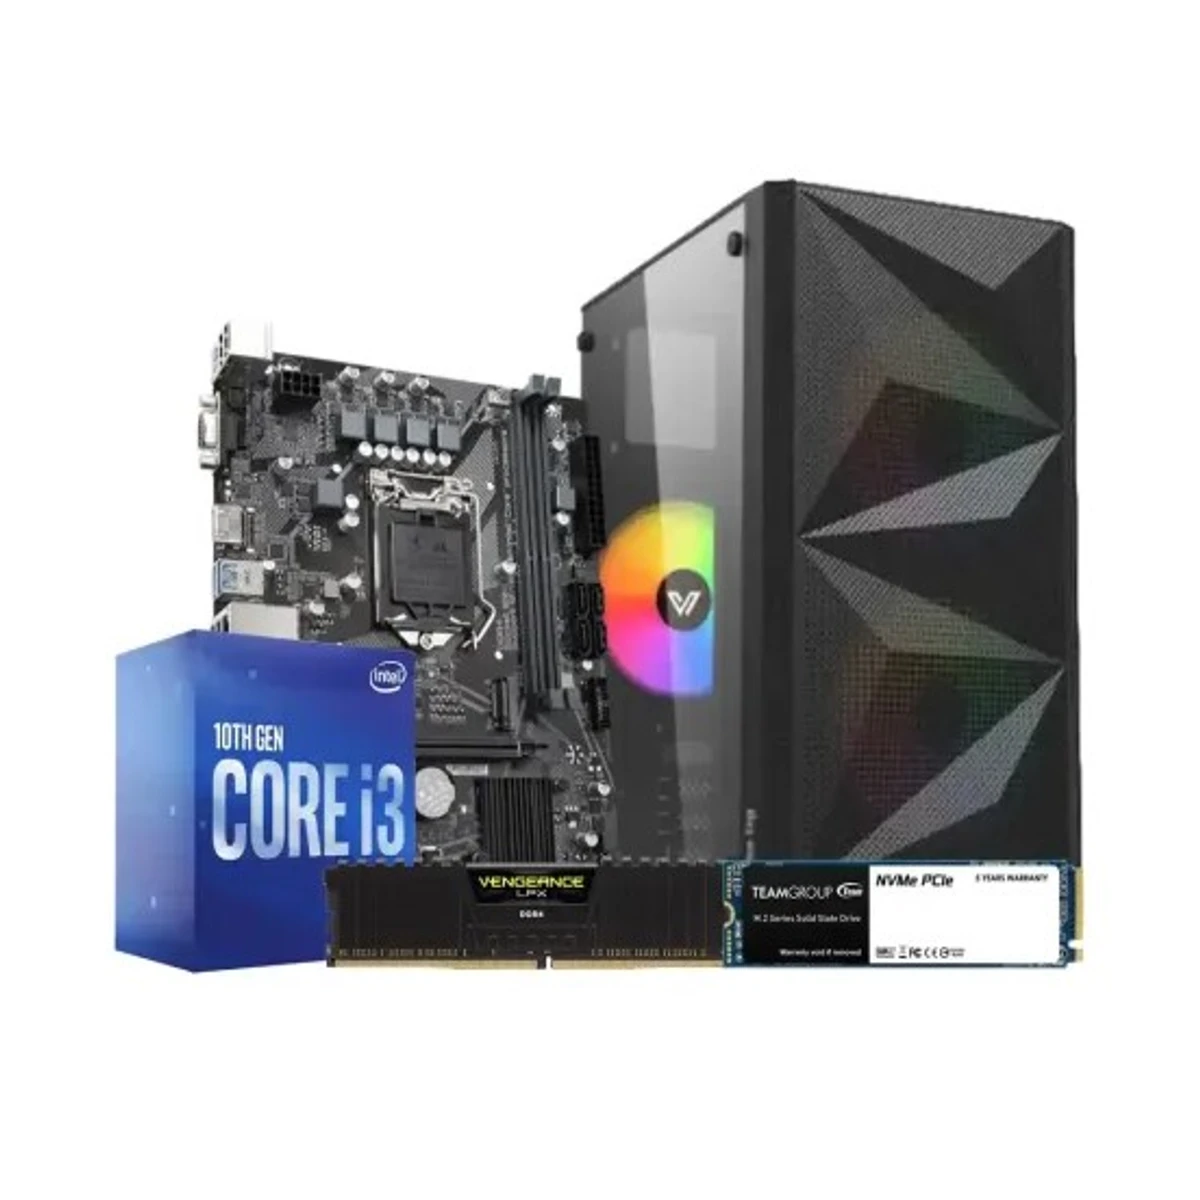 Intel 10th Gen Core i3-10100 Processor